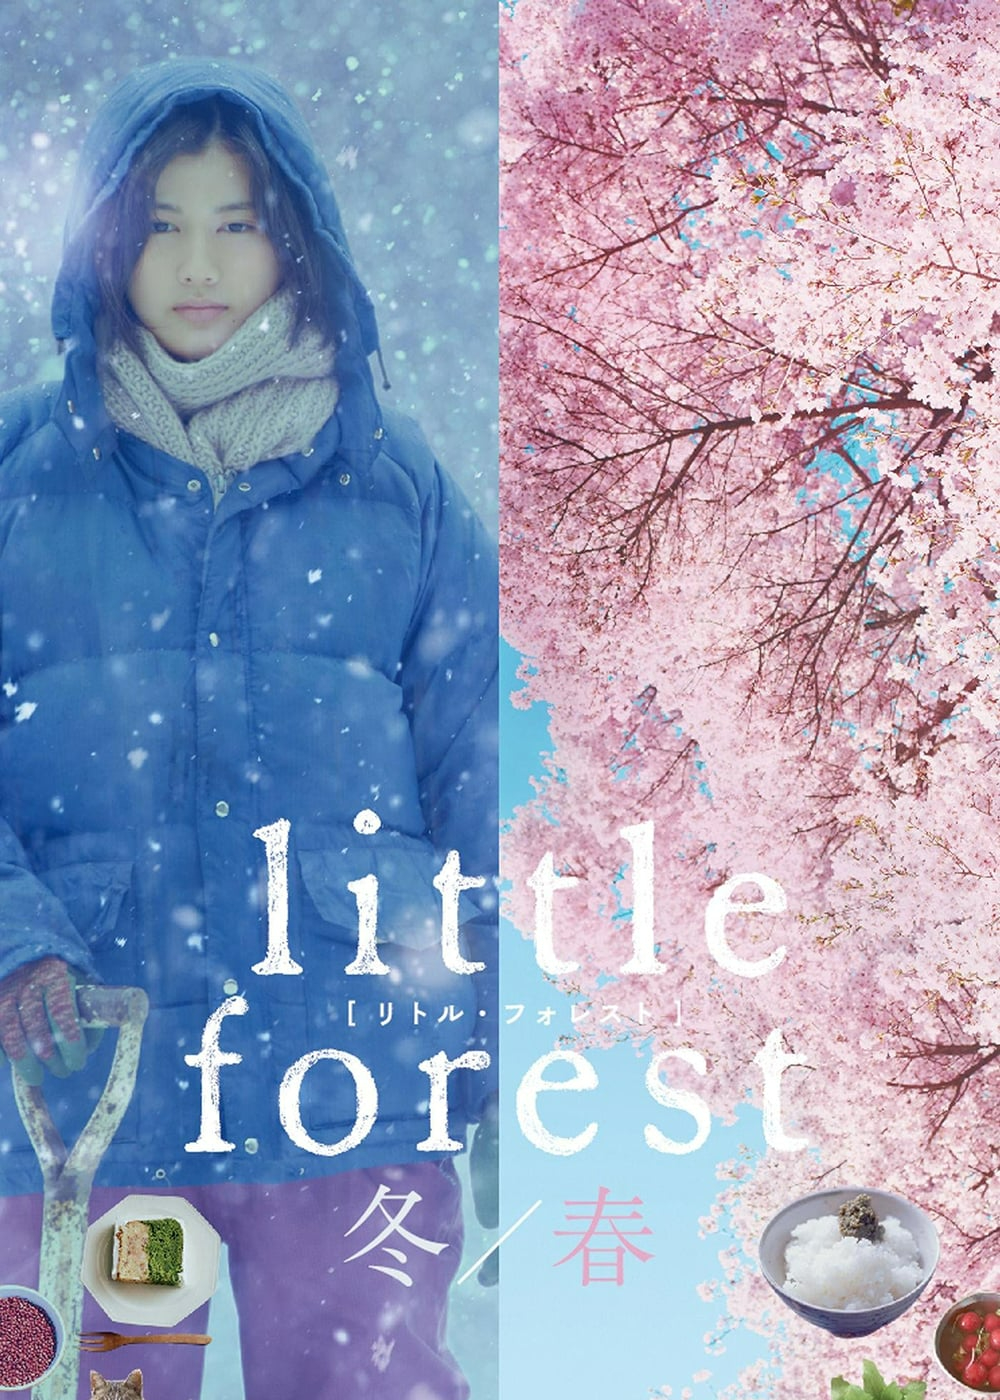 Khu Rừng Nhỏ: Đông/Xuân (Little Forest: Winter/Spring) [2015]